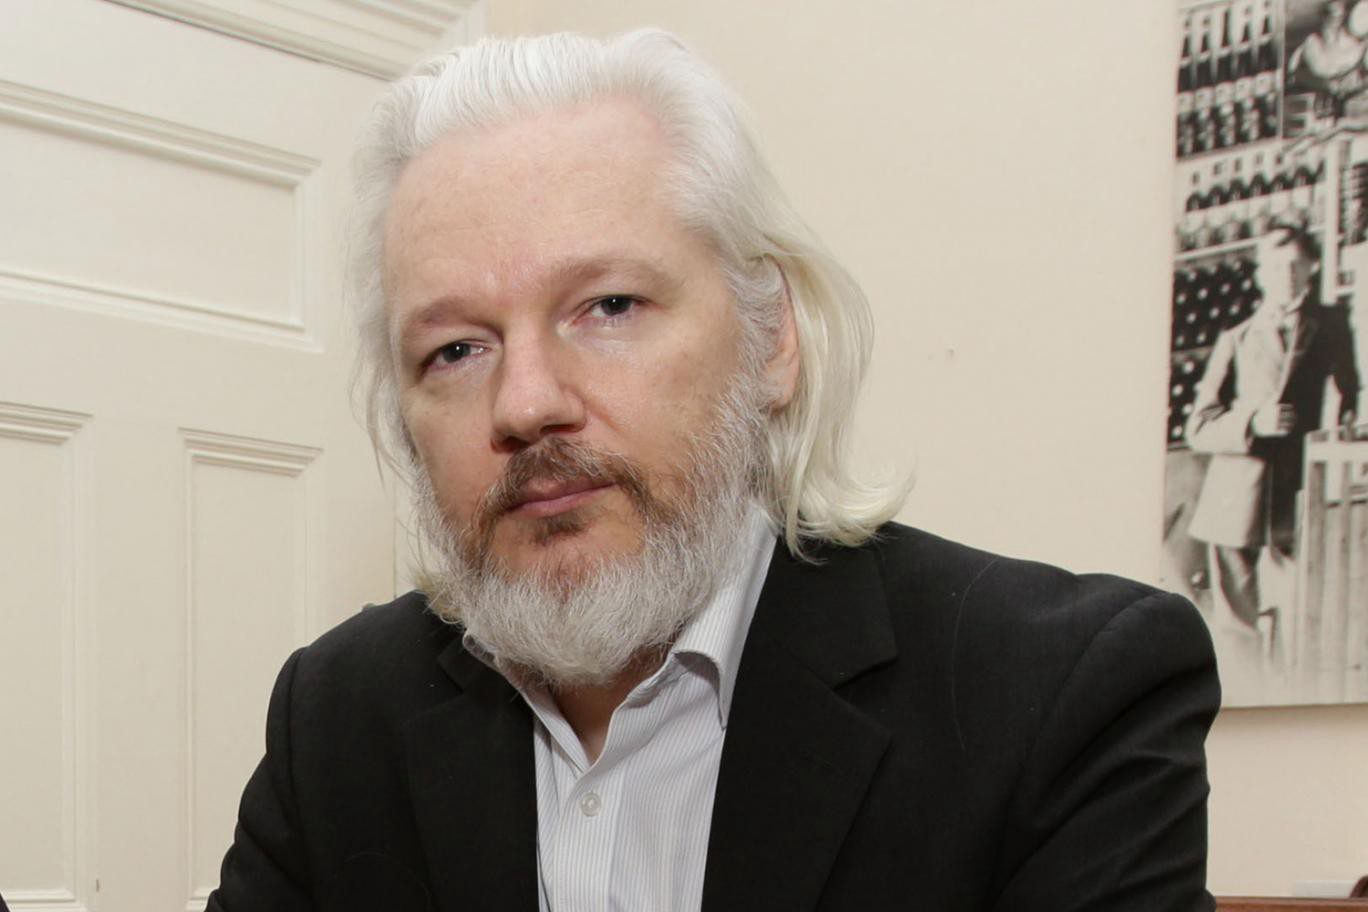  Aprueban extradición de Assange a EE. UU.